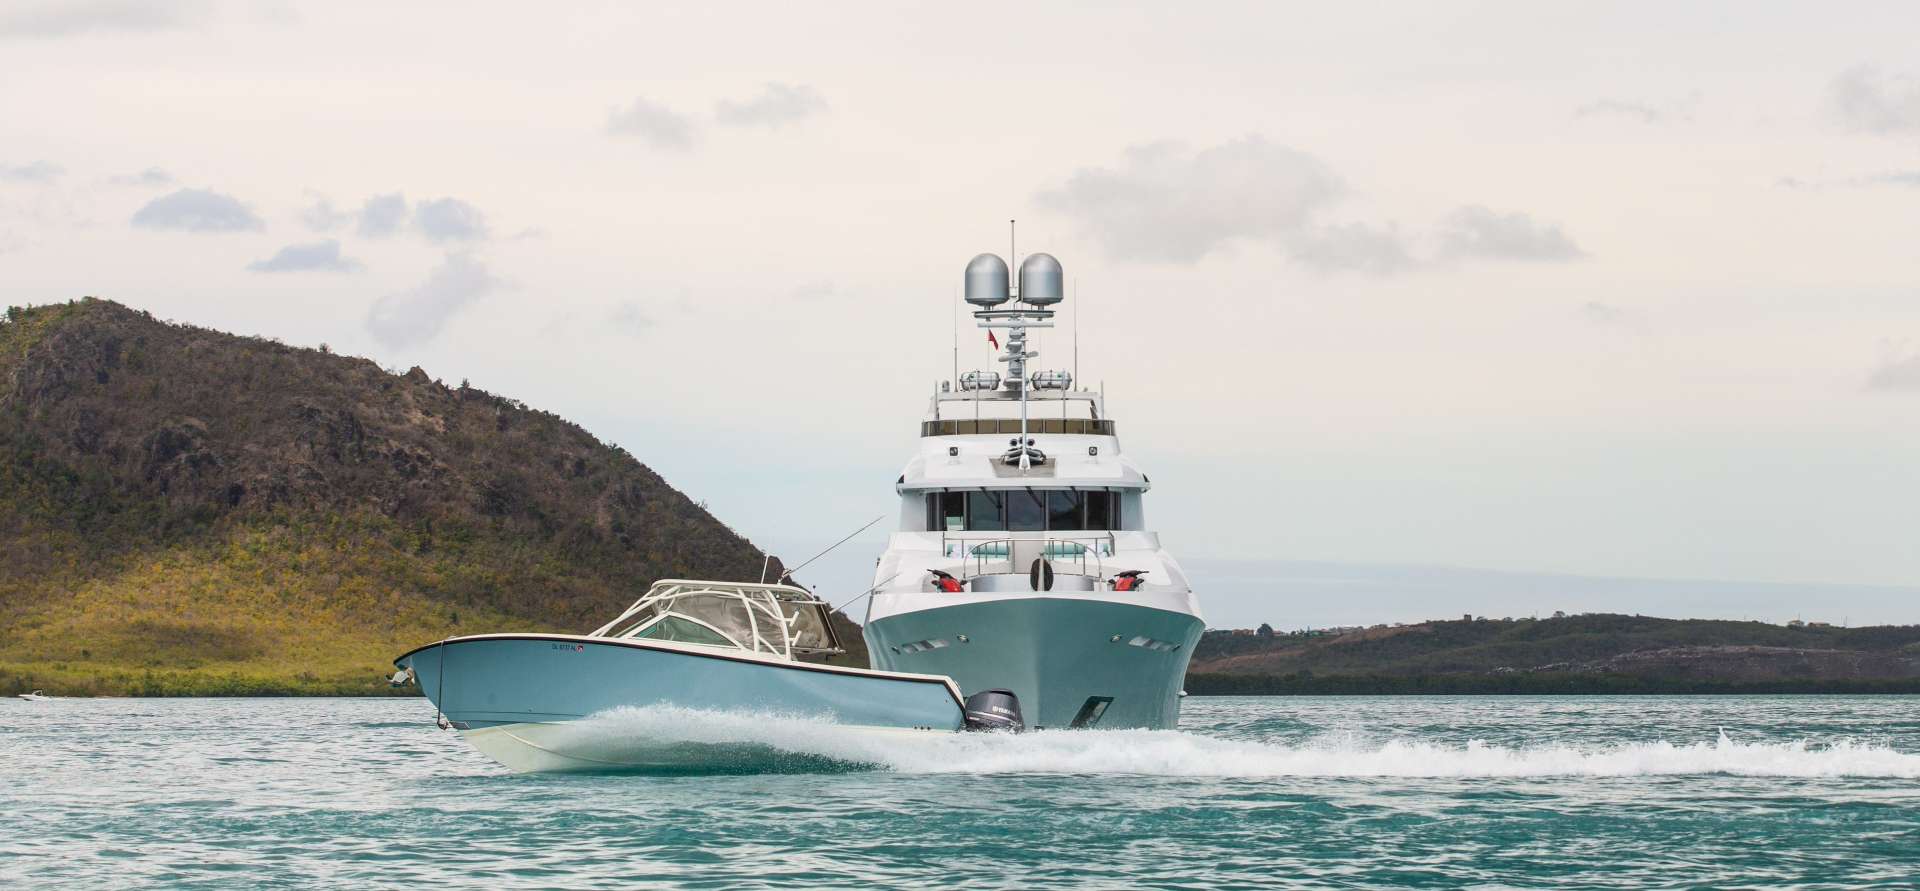 Motor Yacht 'JUST ENOUGH' 34ft Tender, 11 PAX, 9 Crew, 141.00 Ft, 43.00 Meters, Built 2012, ., Refit Year 2018